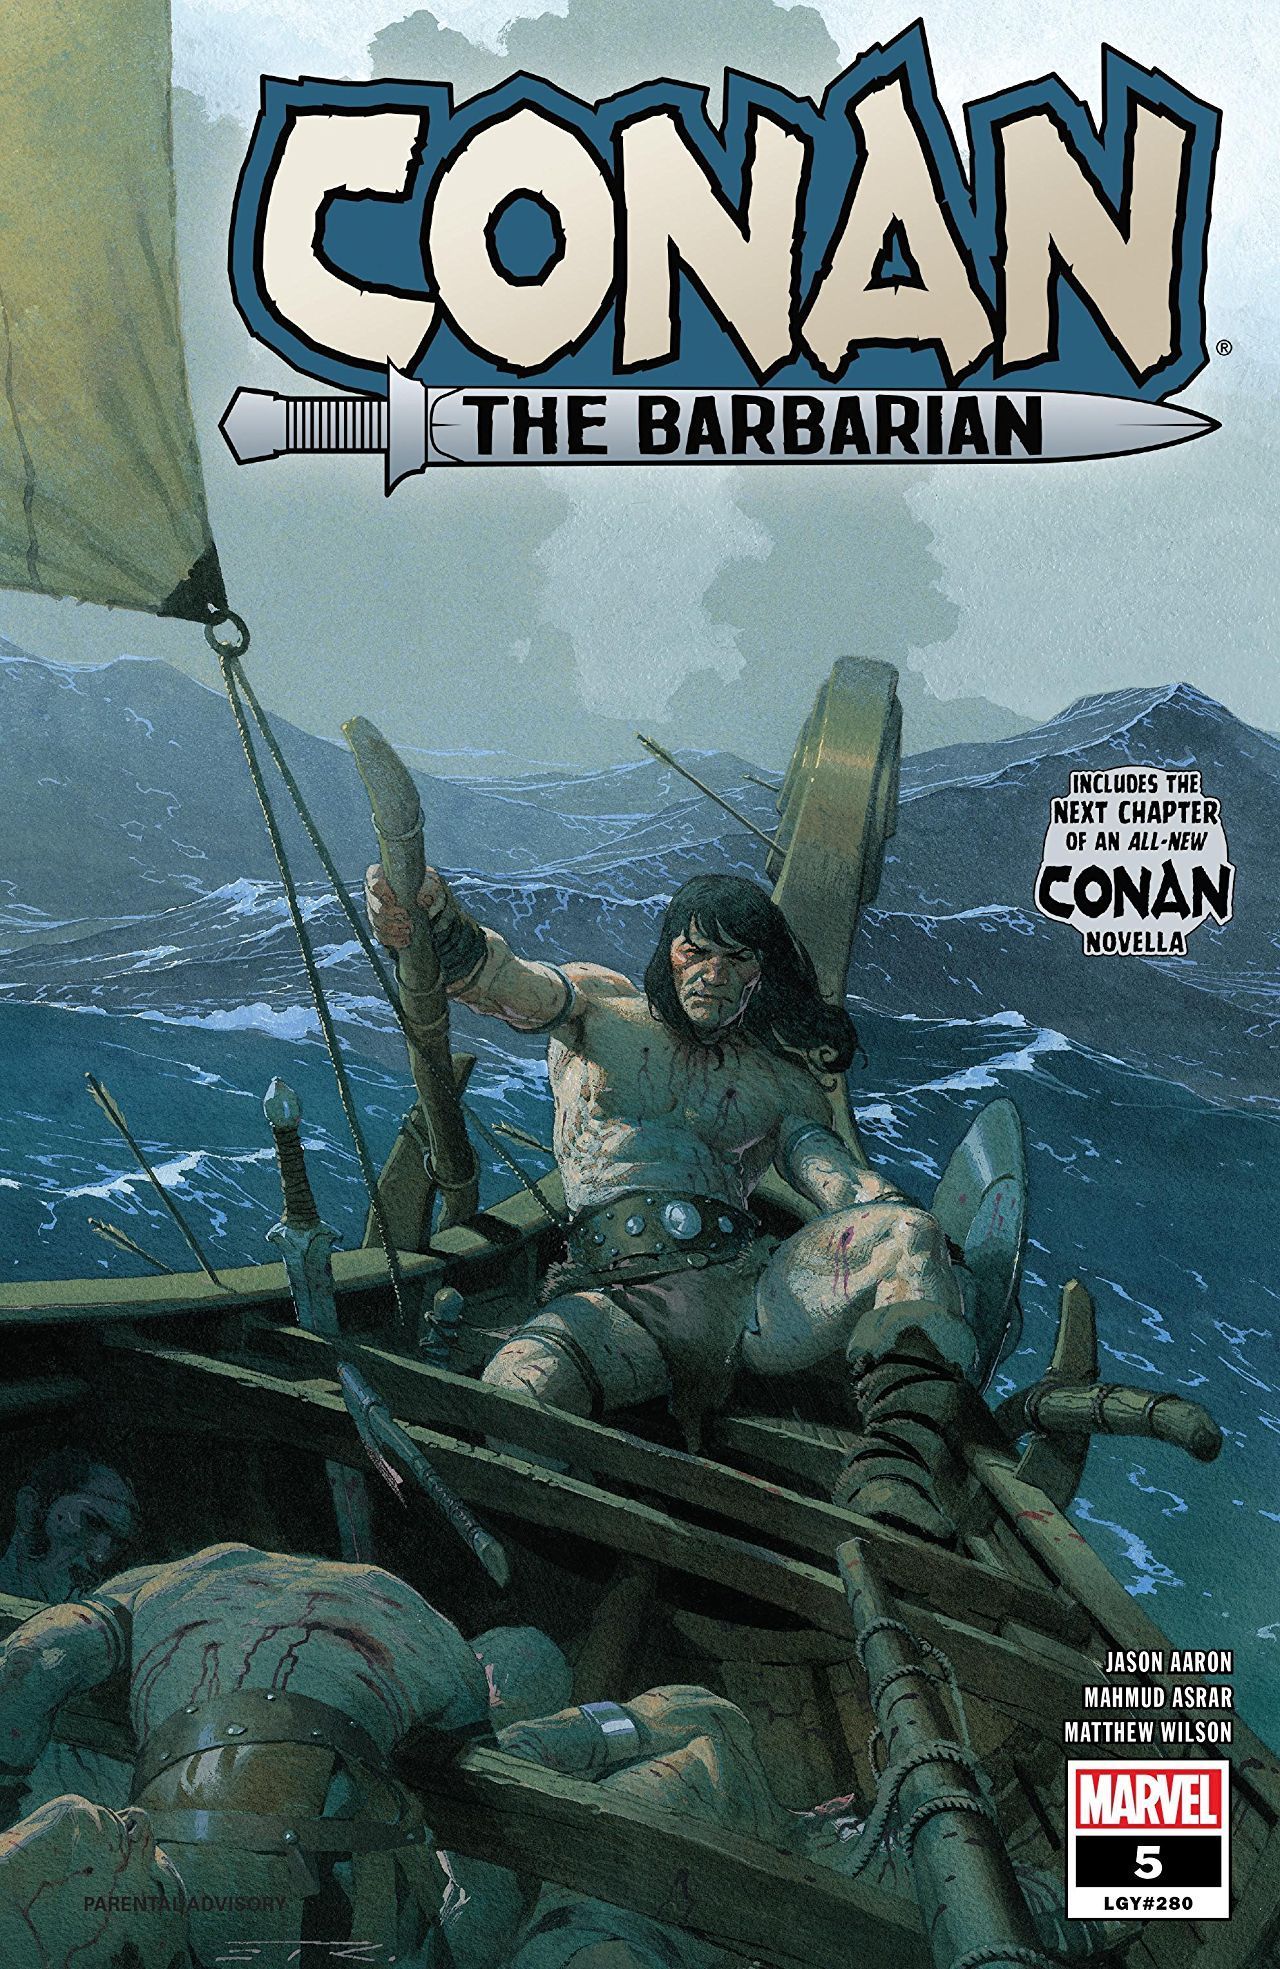 Conan the Barbarian # 5 review